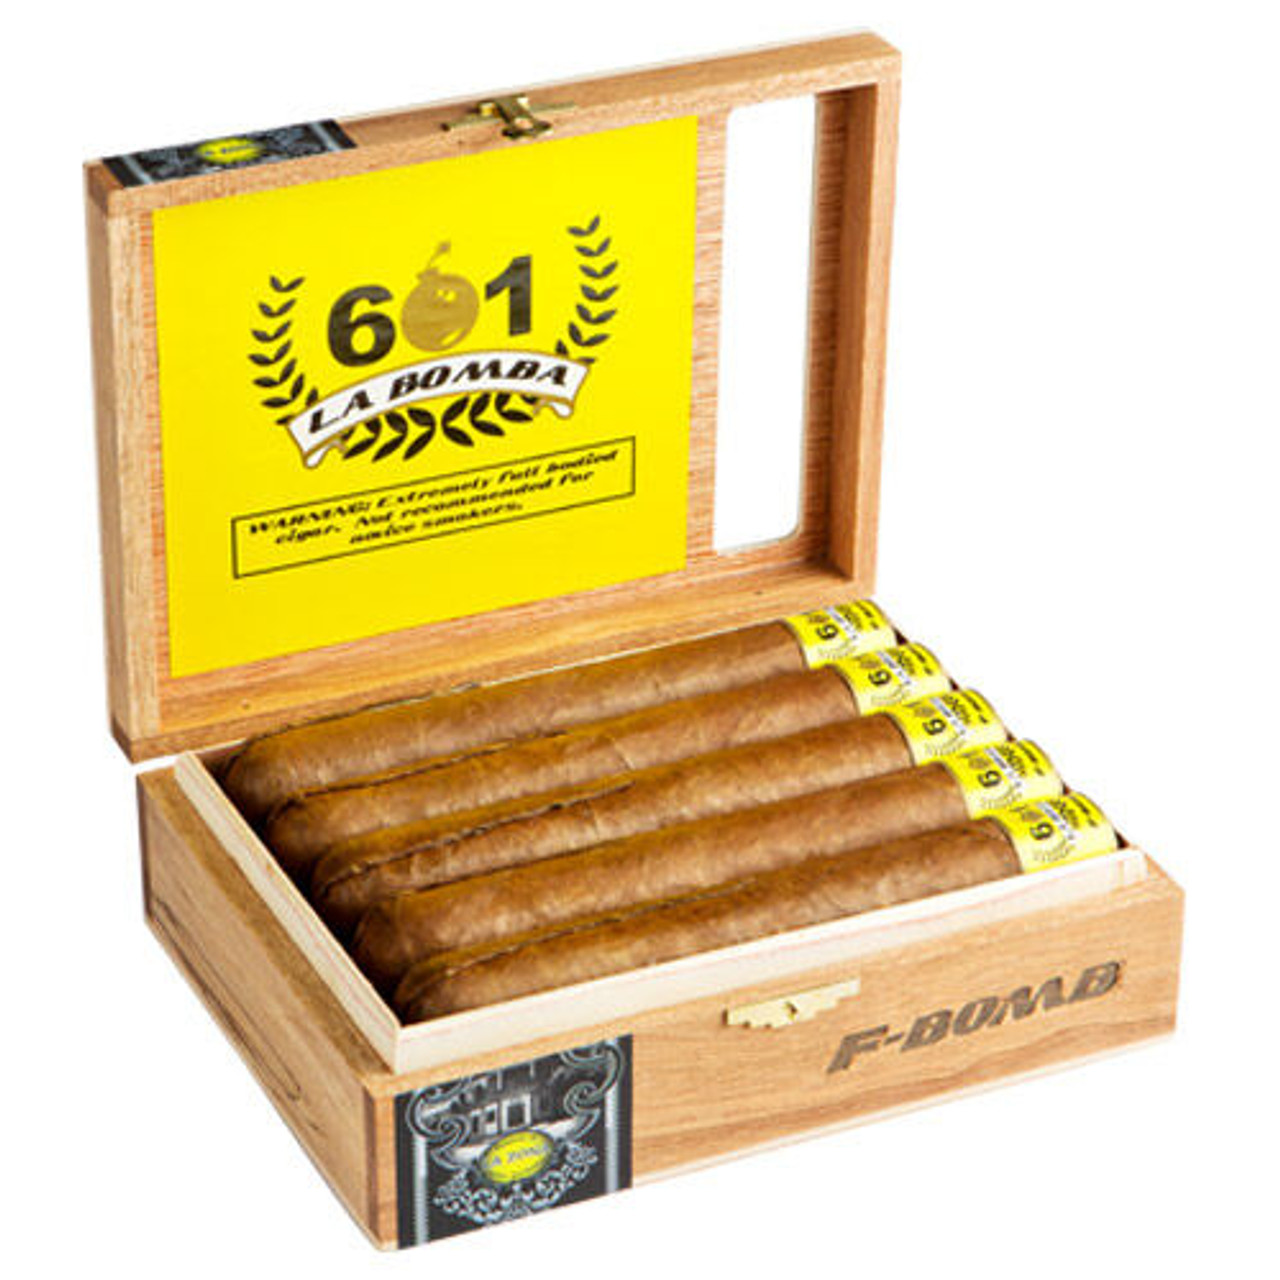 601 La Bomba F-Bomb - 7 x 70 Cigars (Box of 10)